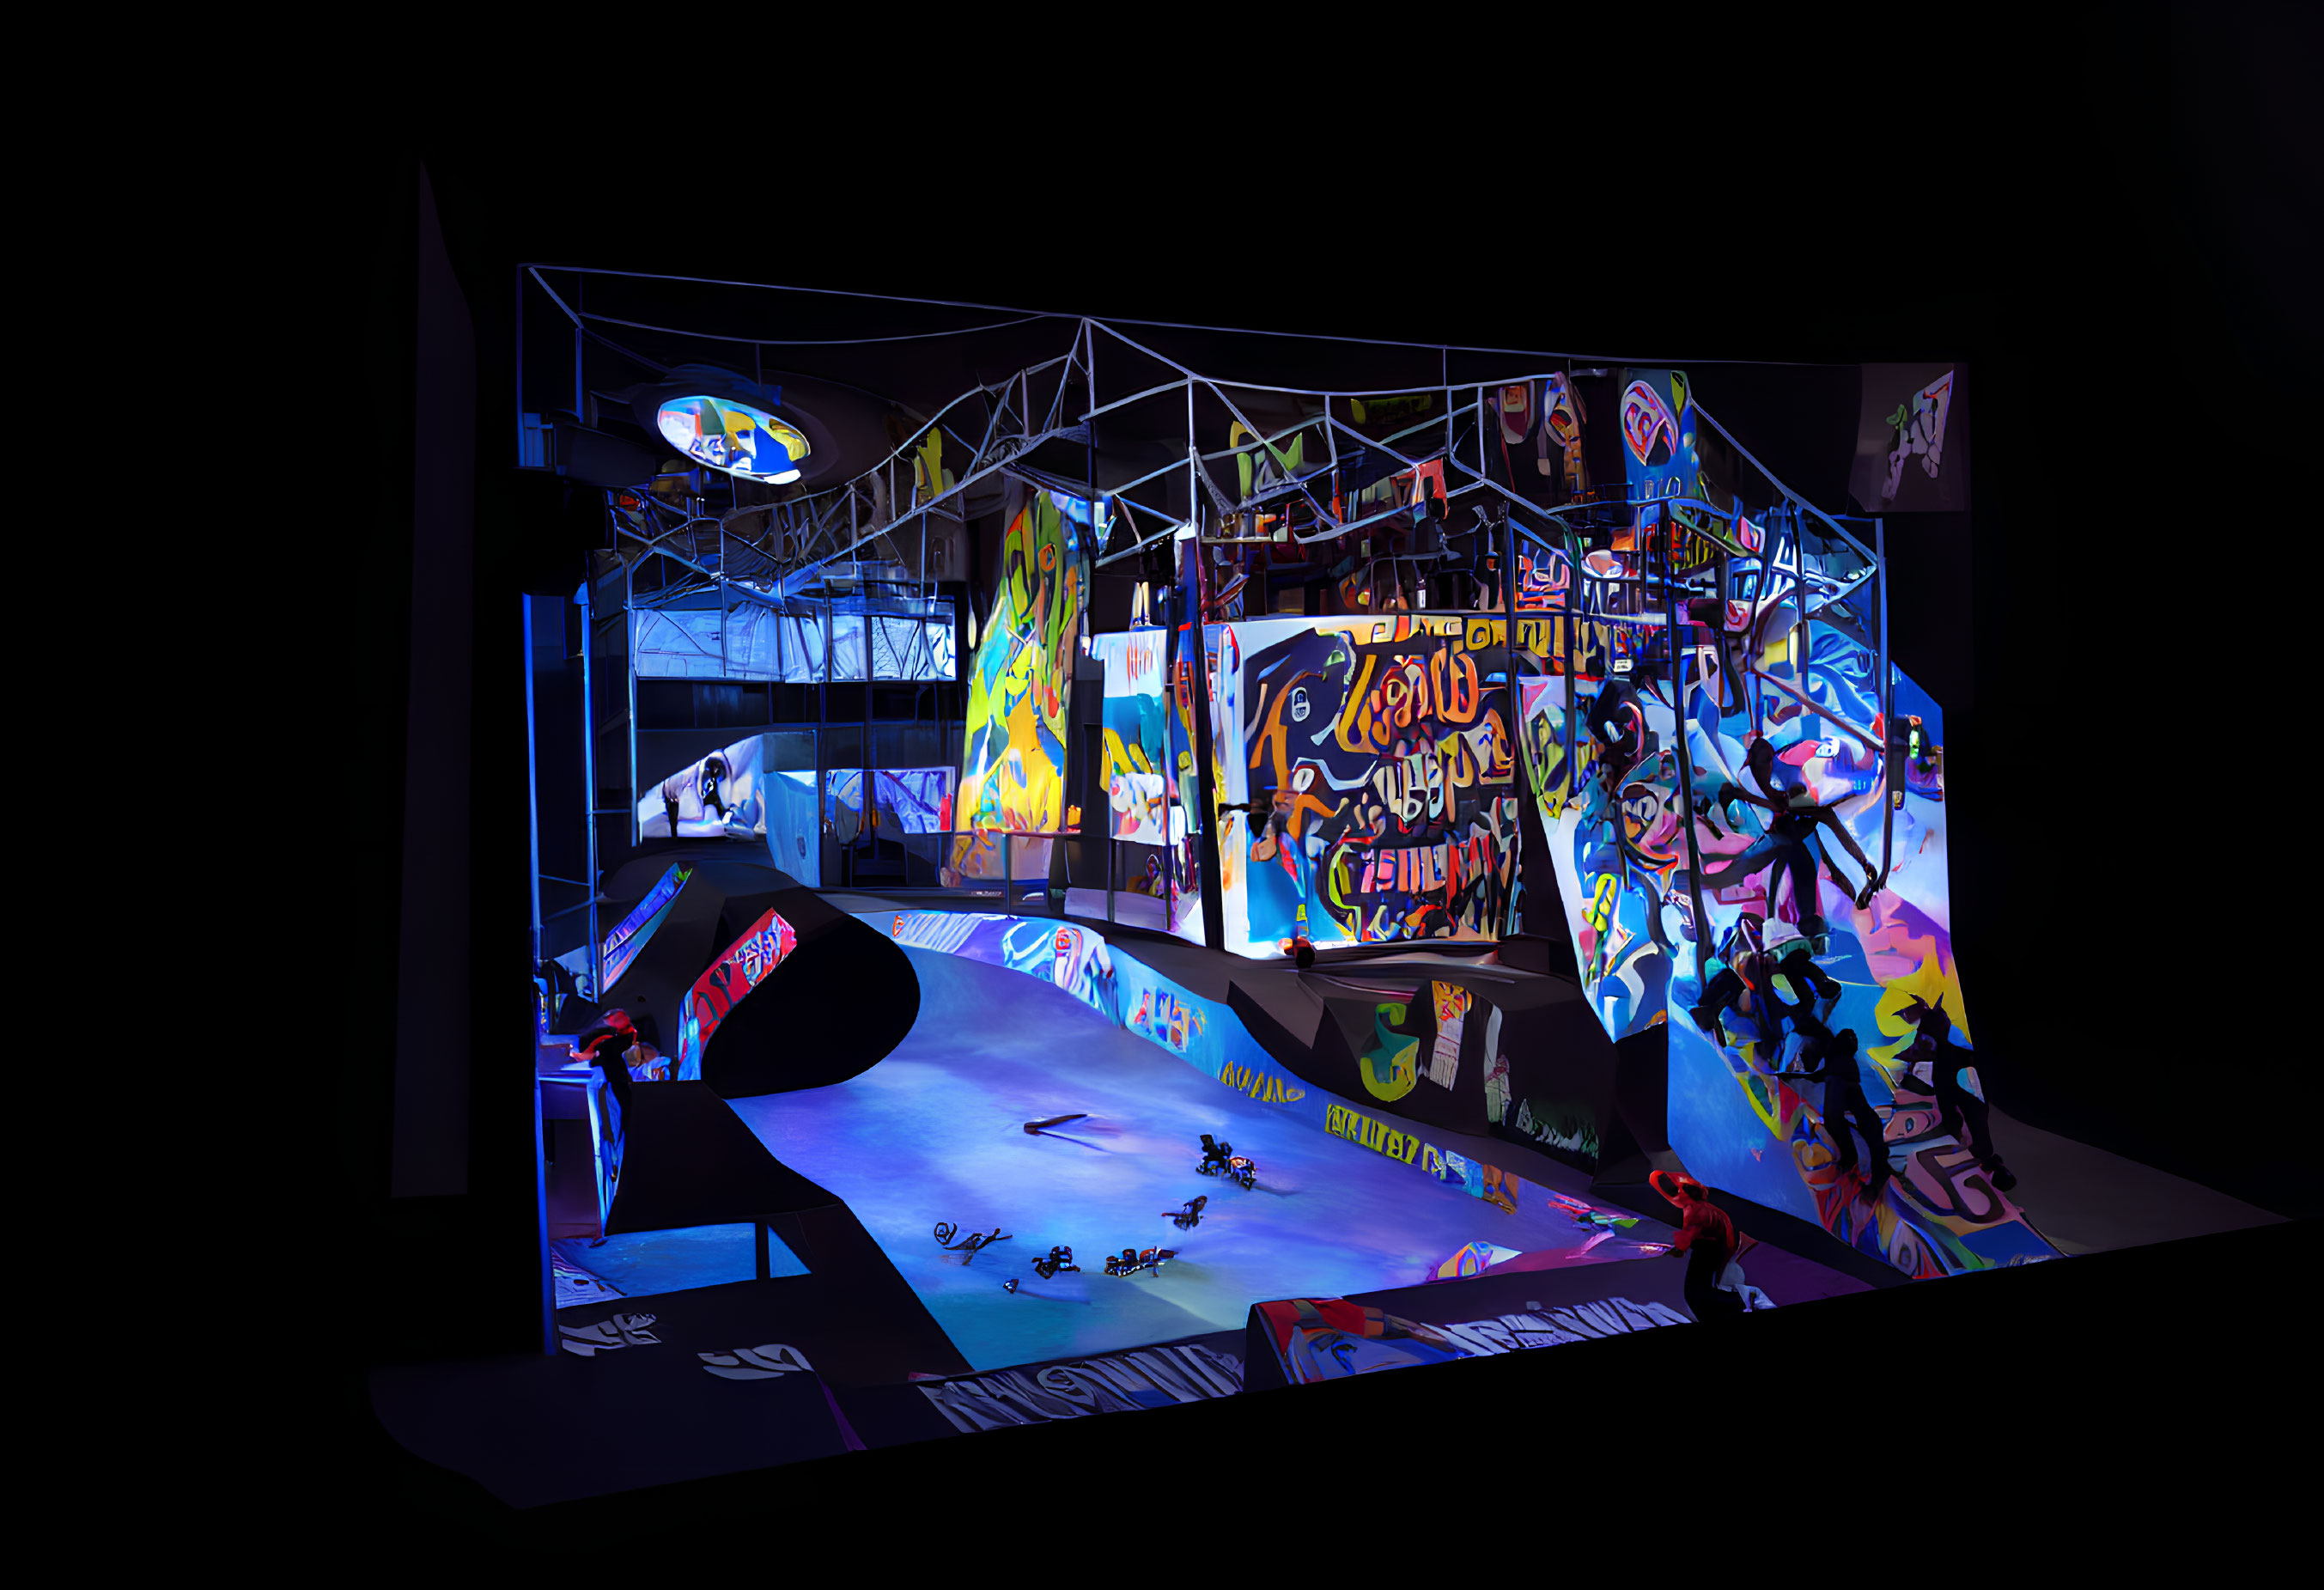 Colorful Indoor Skatepark with Graffiti Artwork and Atmospheric Lighting